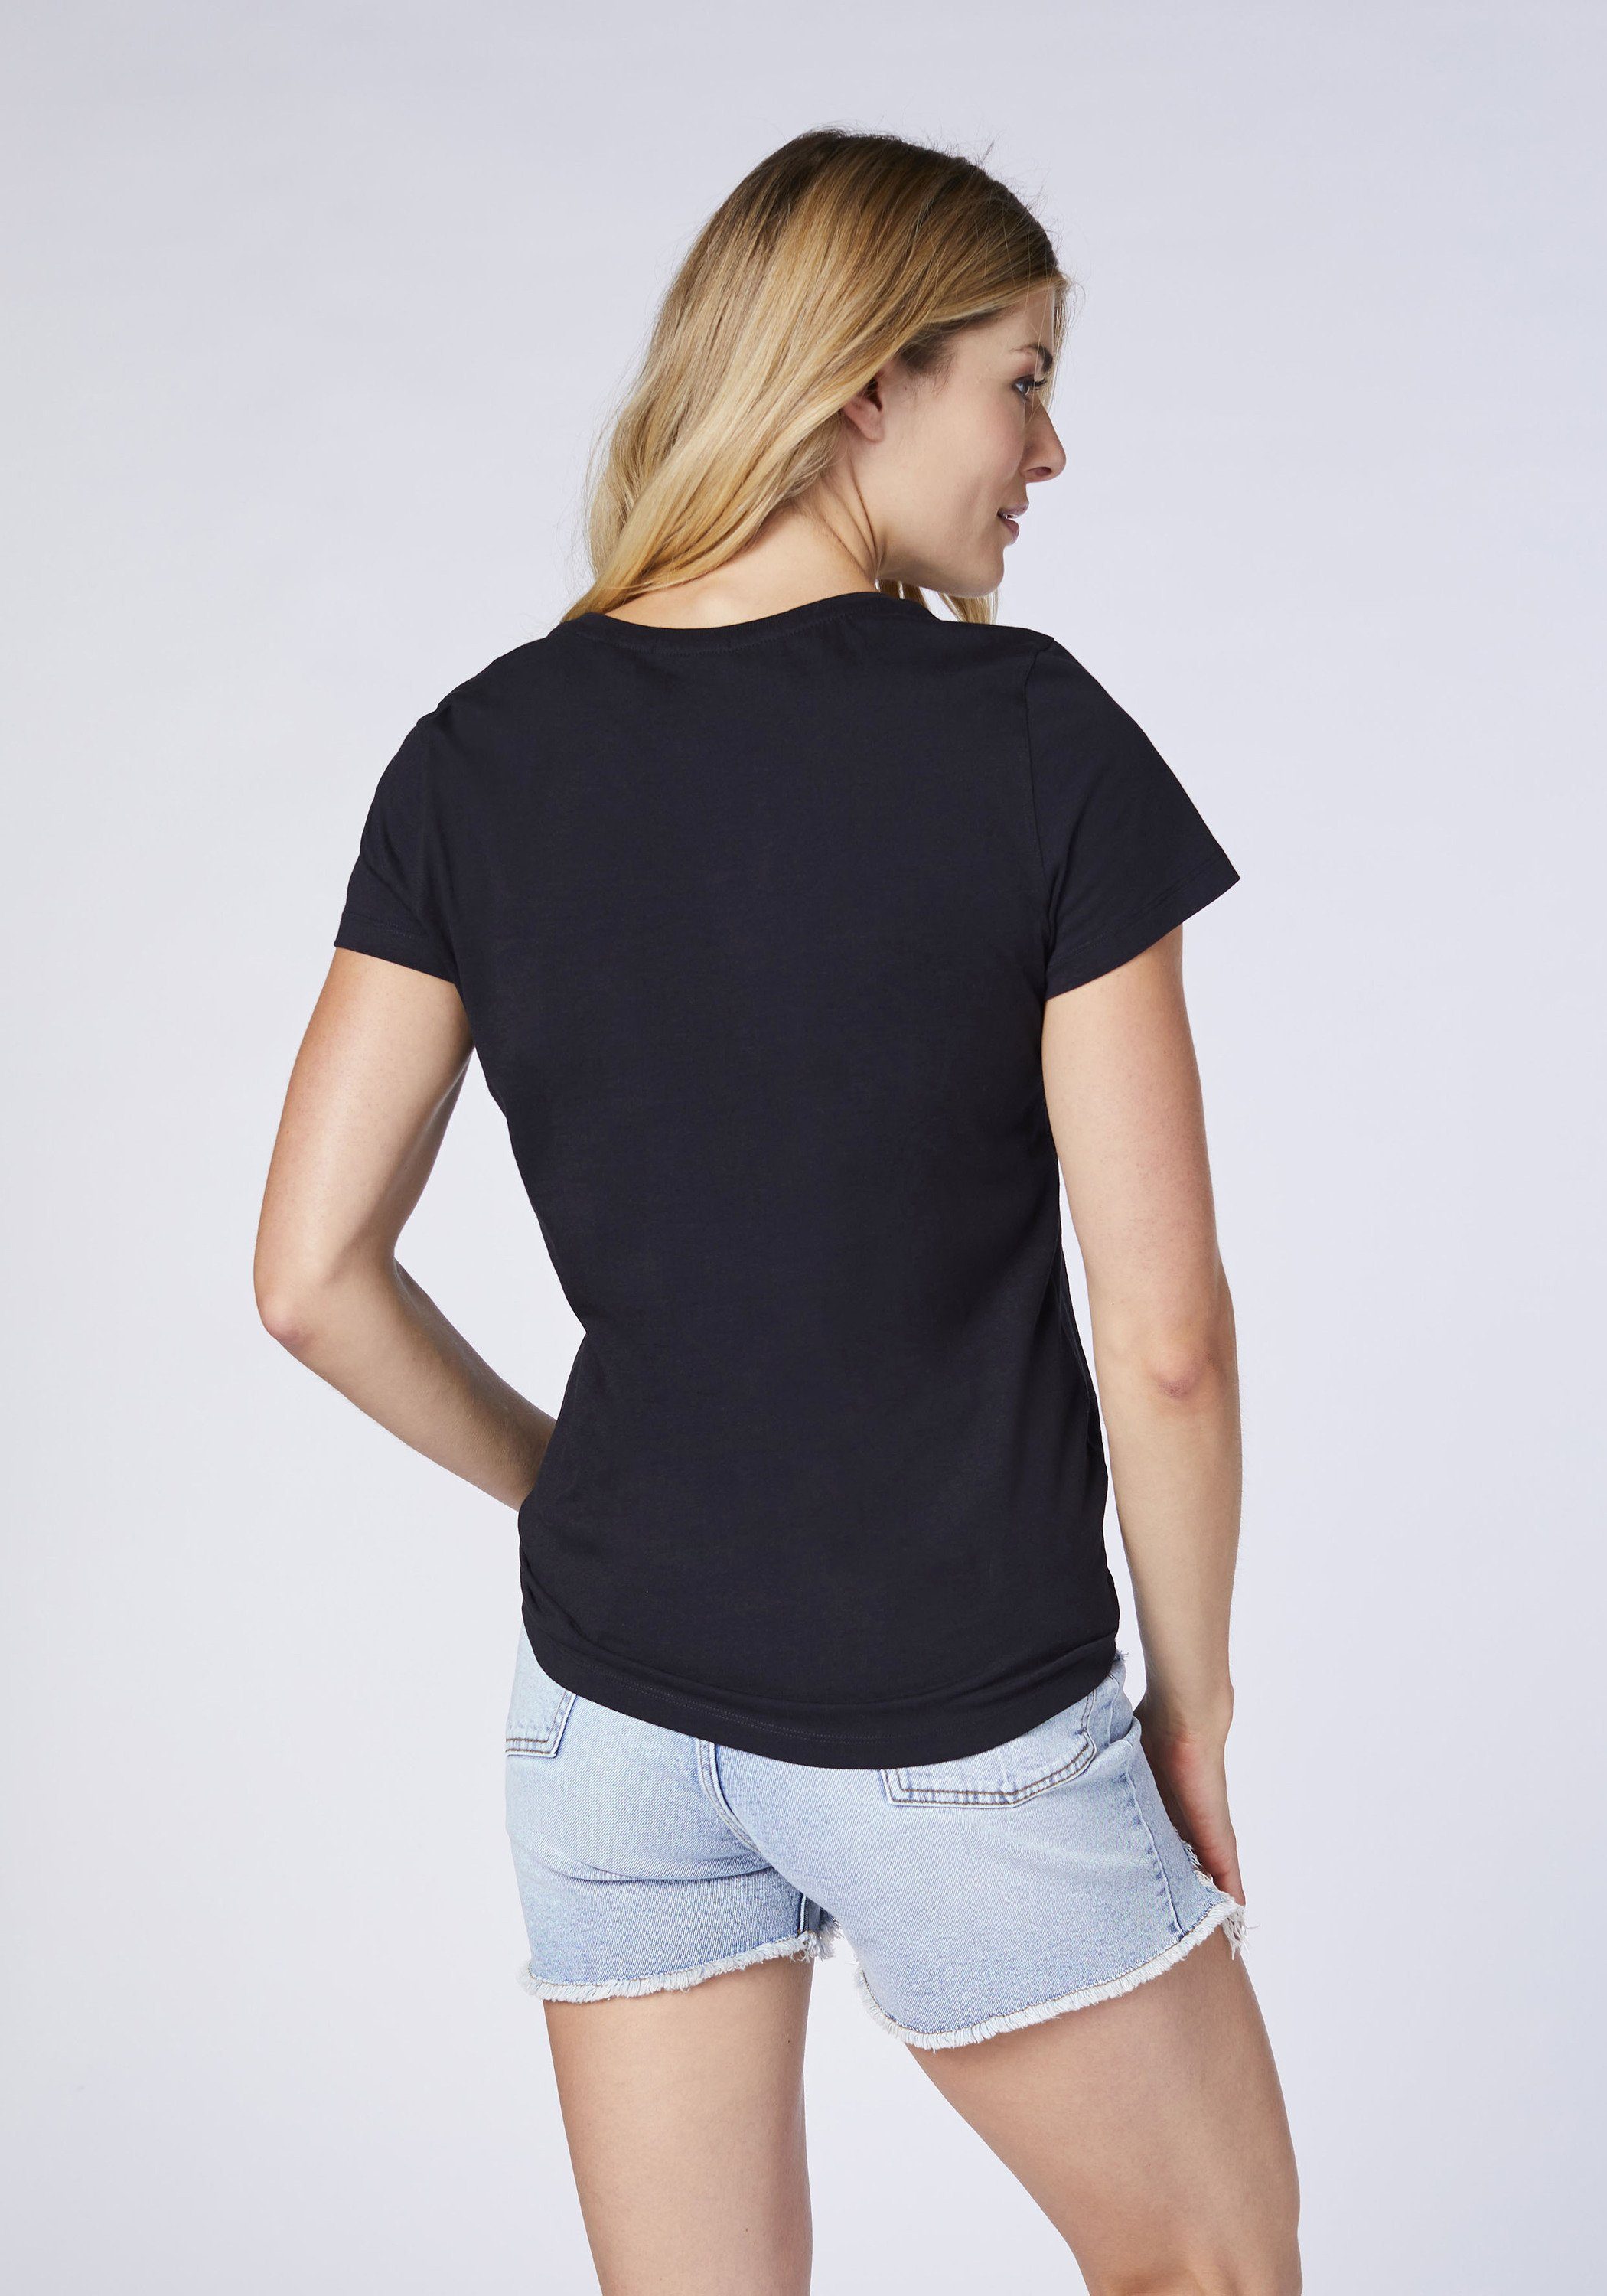 Print-Shirt Frontprint 1 Black T-Shirt Deep Chiemsee farbenfrohem mit